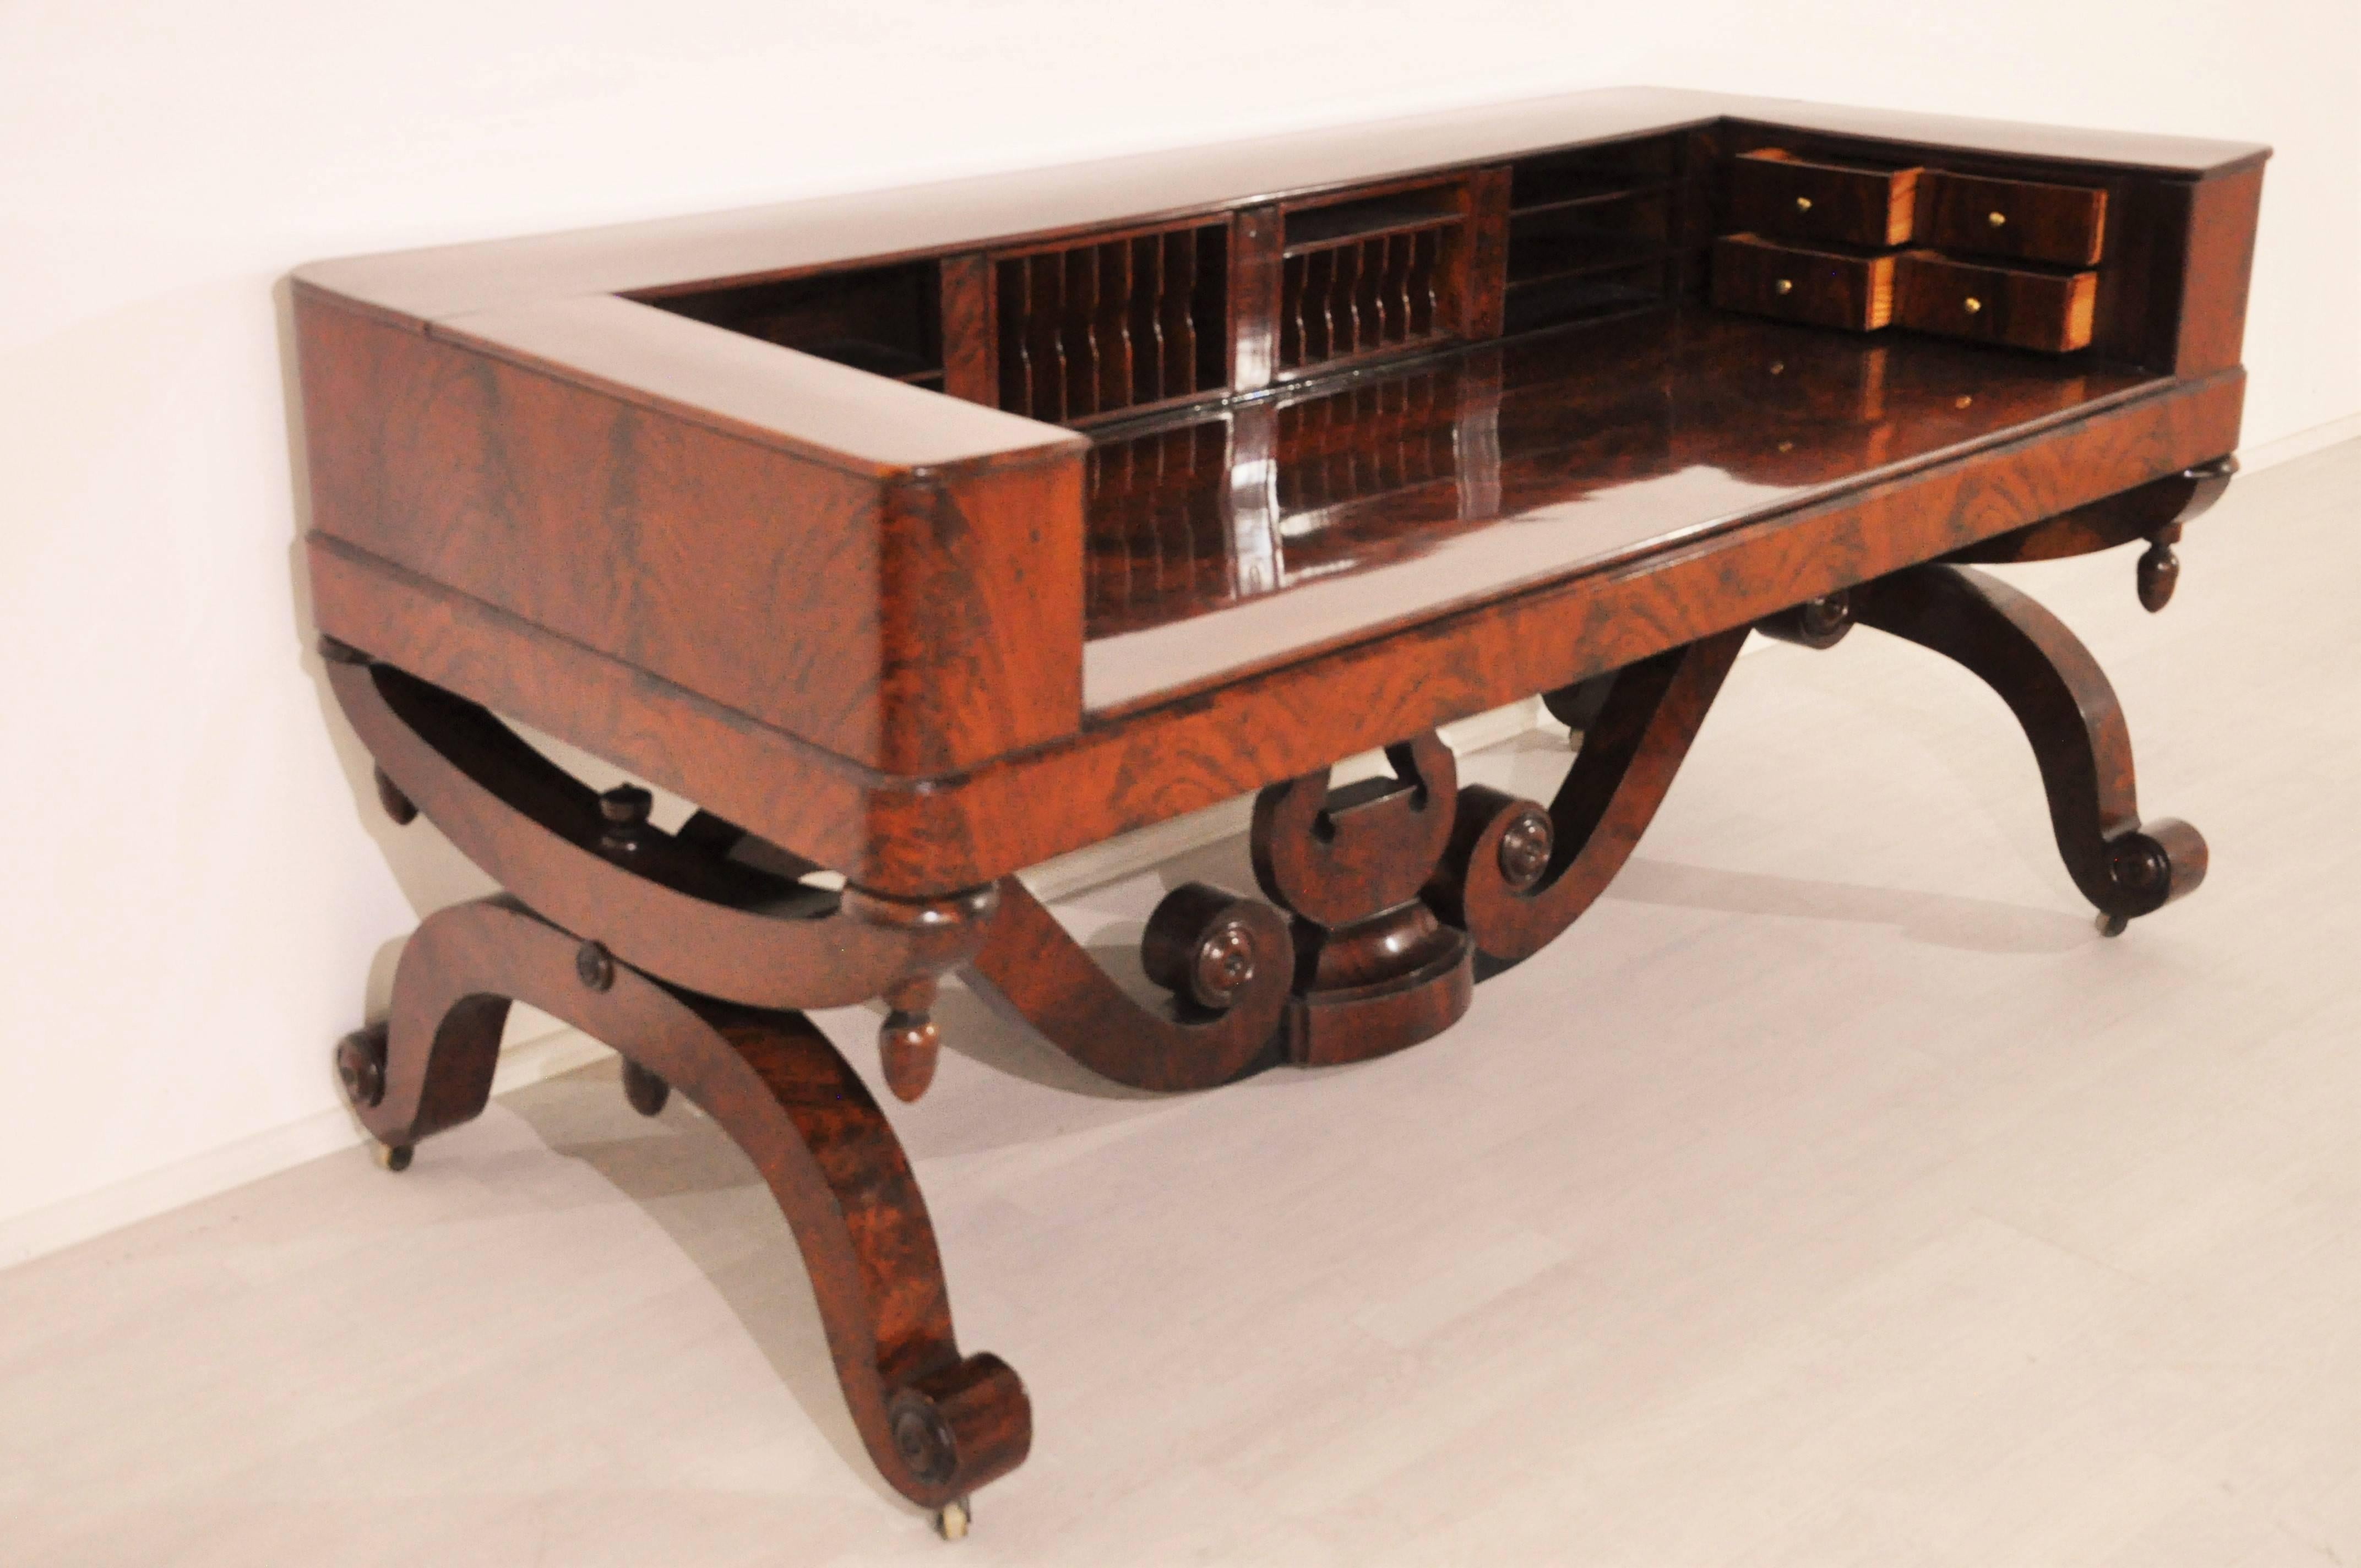 German Antique Biedermeier Mahogany Desk from 1830